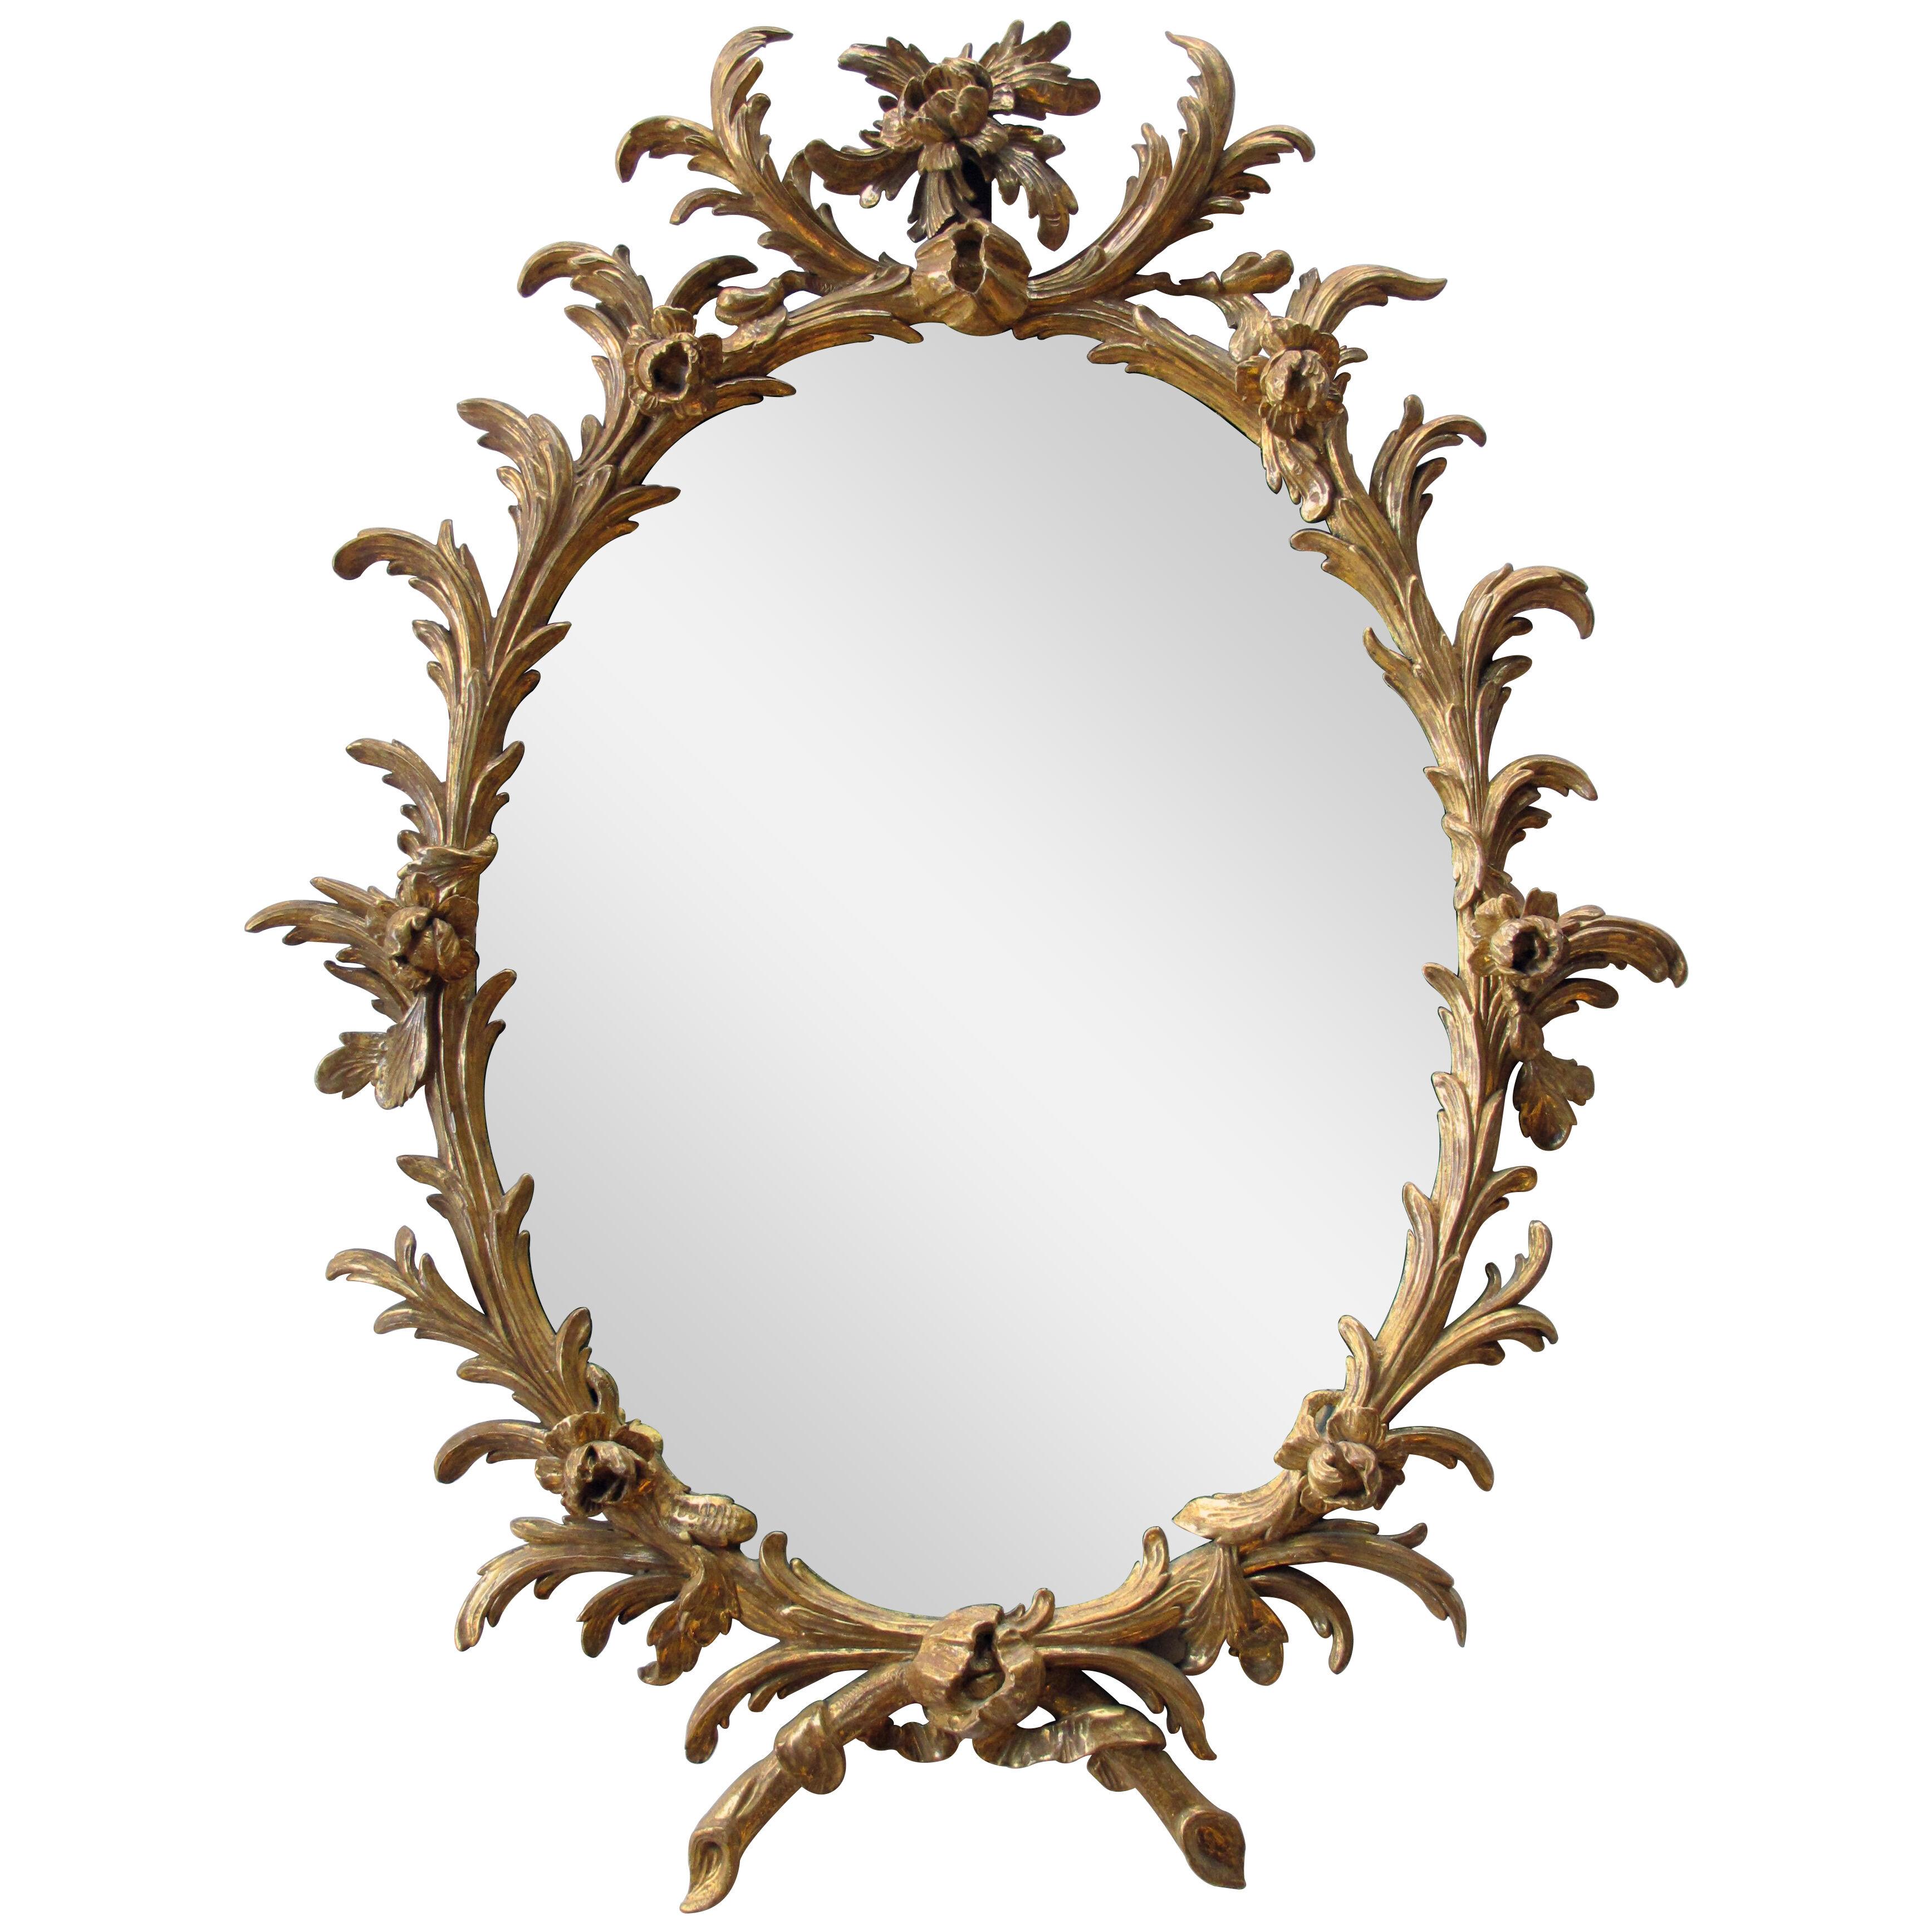 Good Quality English George II Rococo Giltwood Oval Foliate-Carved Mirror